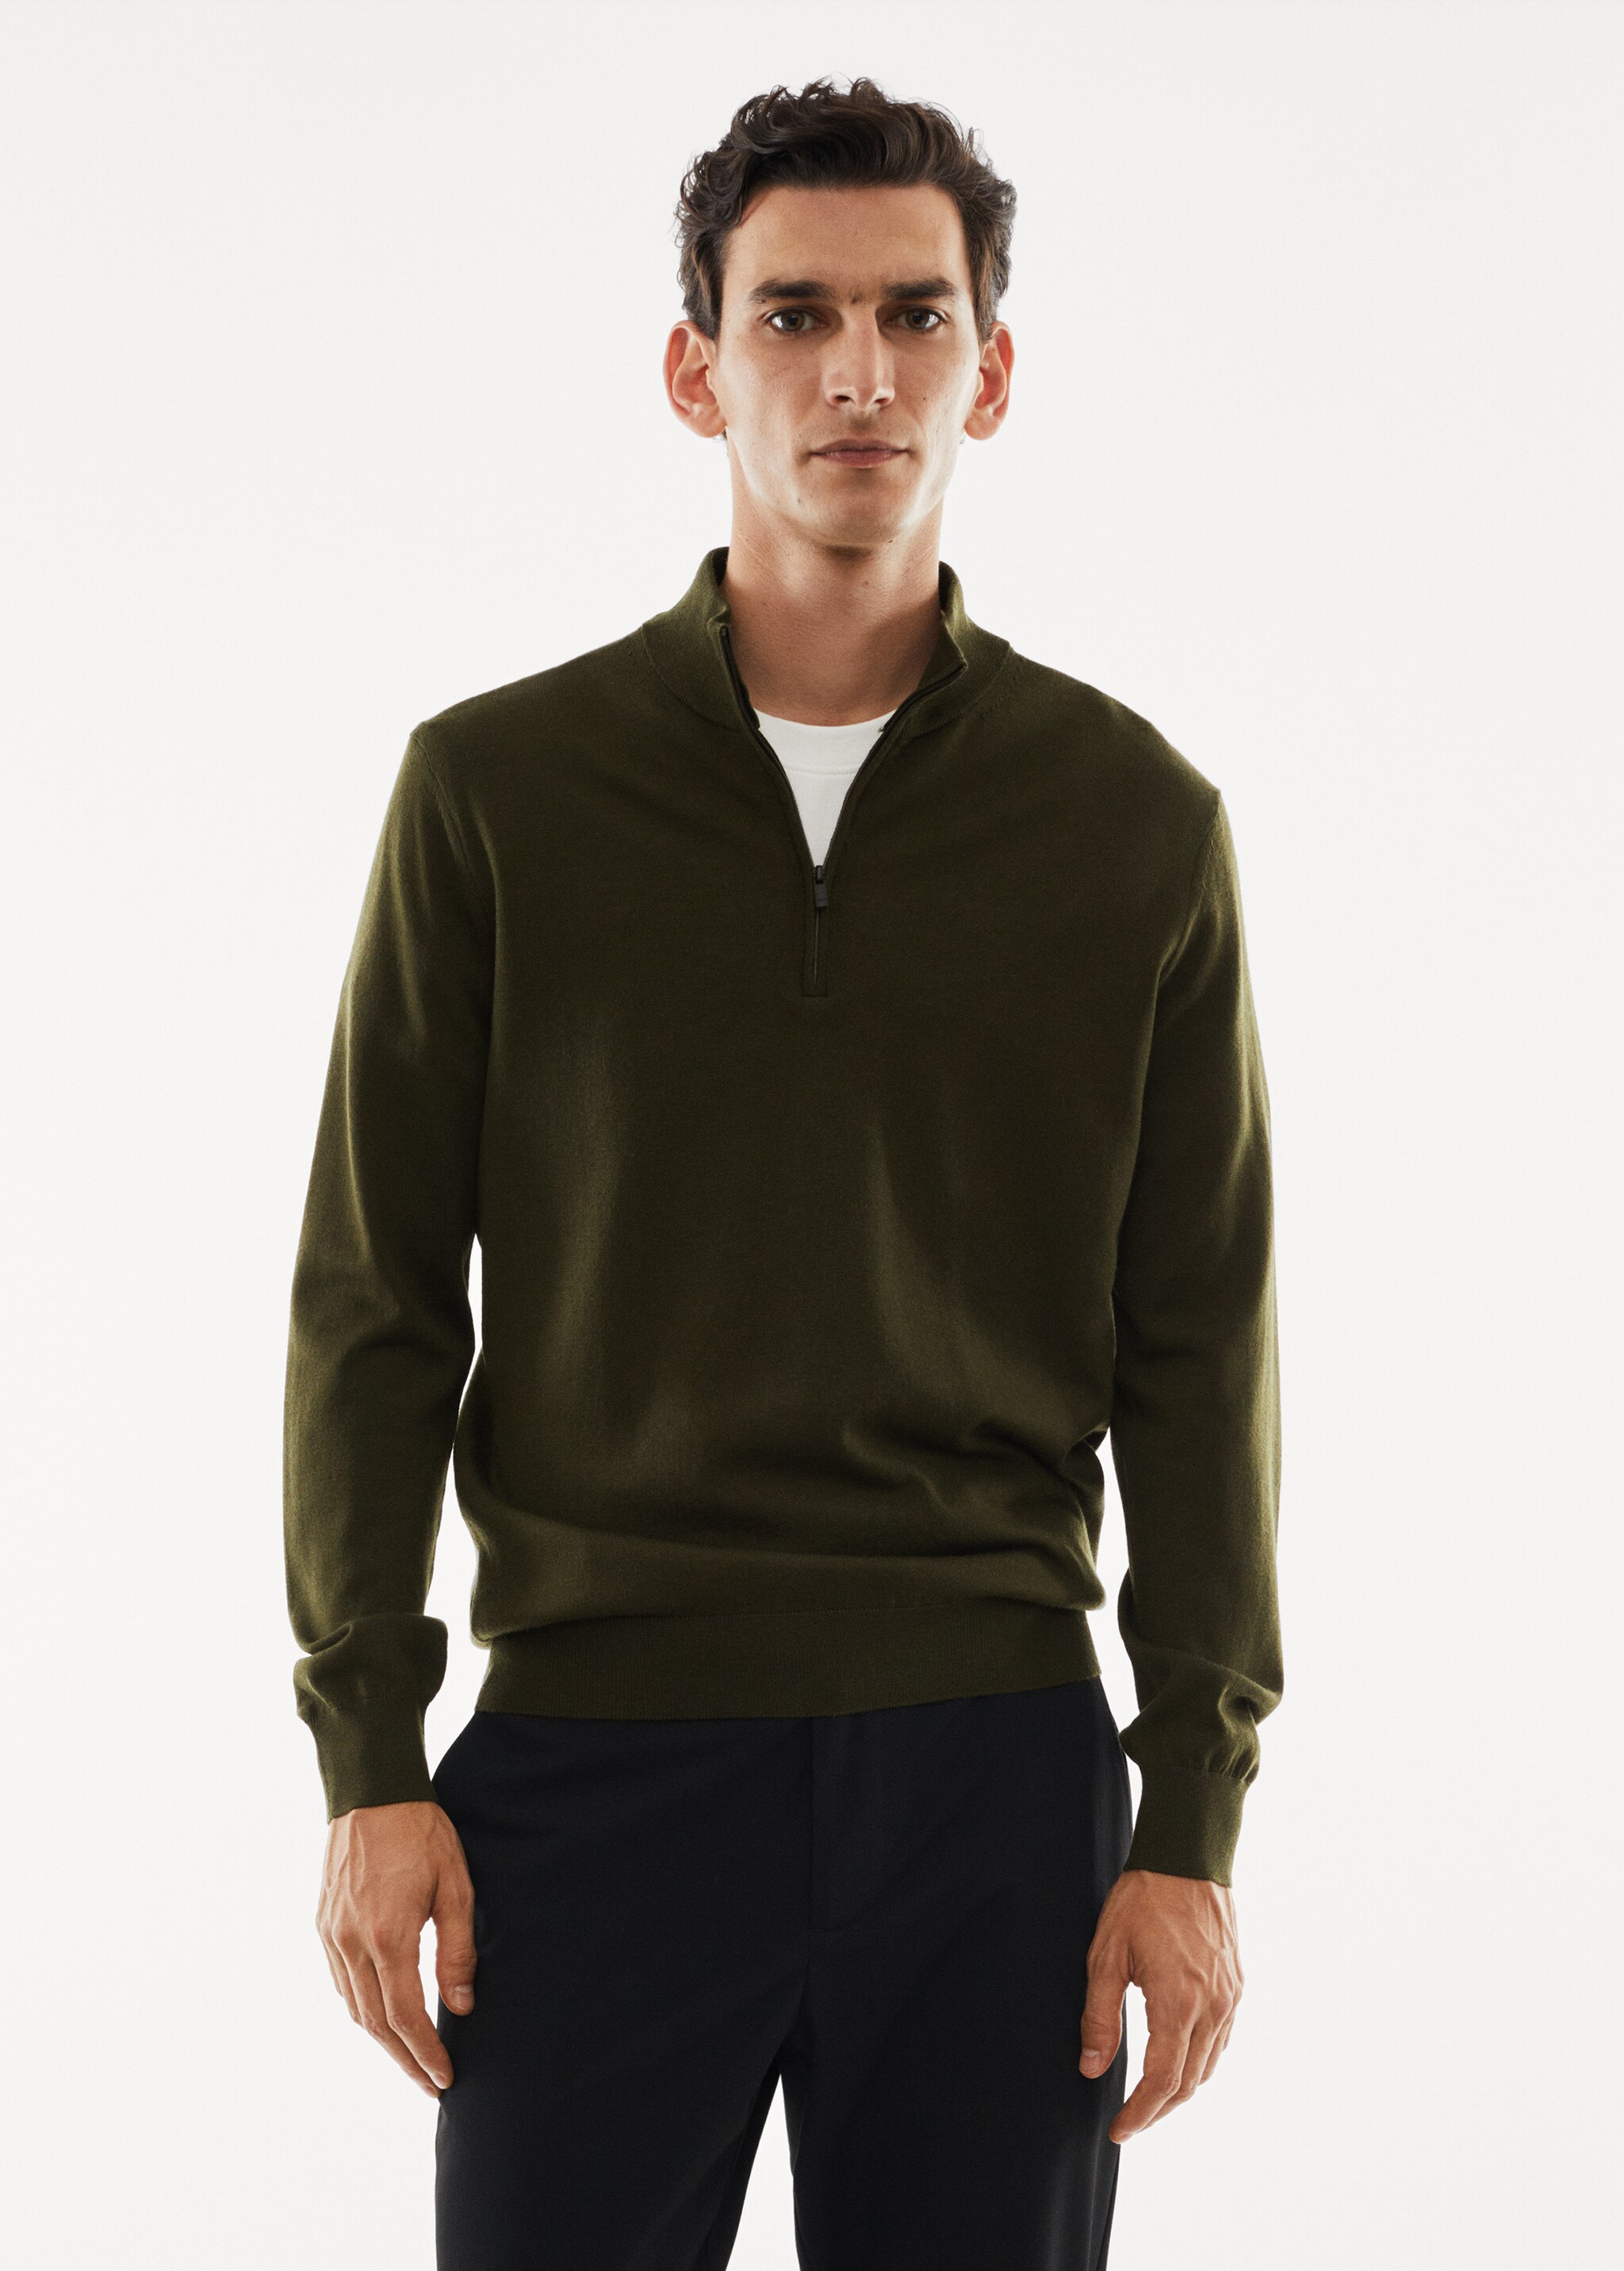 100% merino wool sweater with zip collar - Medium plane